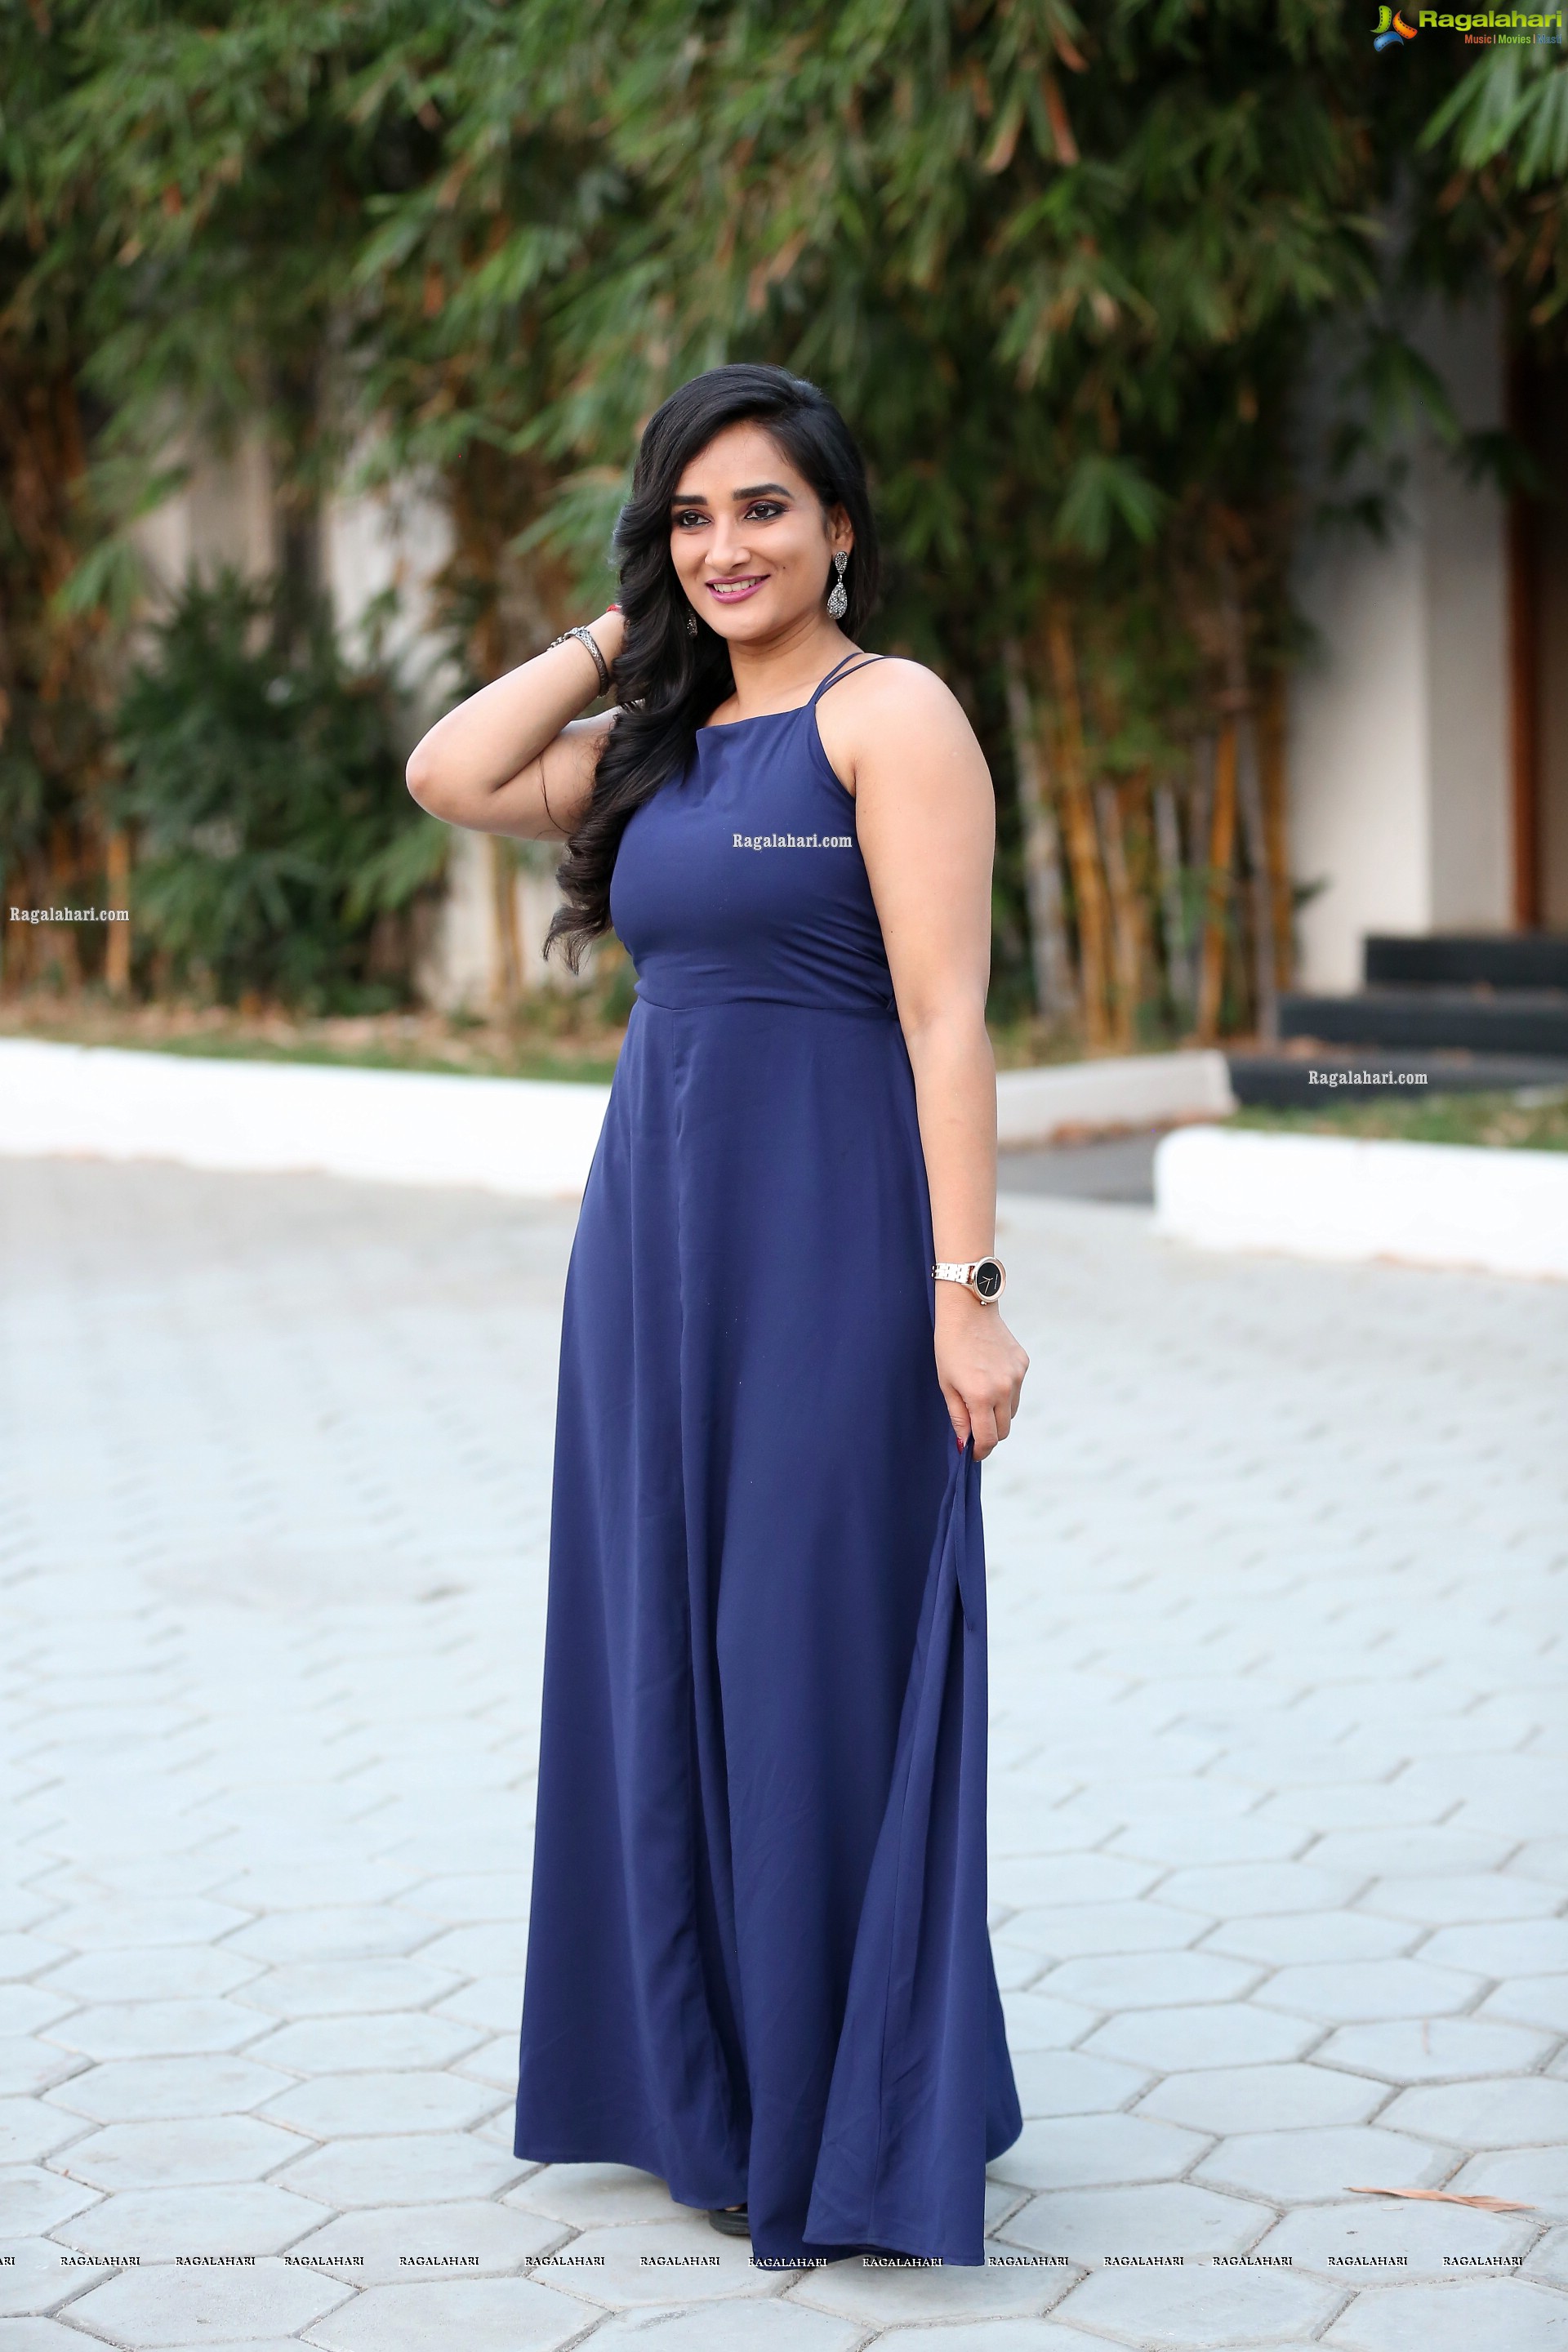 Madhu Krishnan in Navy Blue Spaghetti Strap Dress, HD Photo Gallery